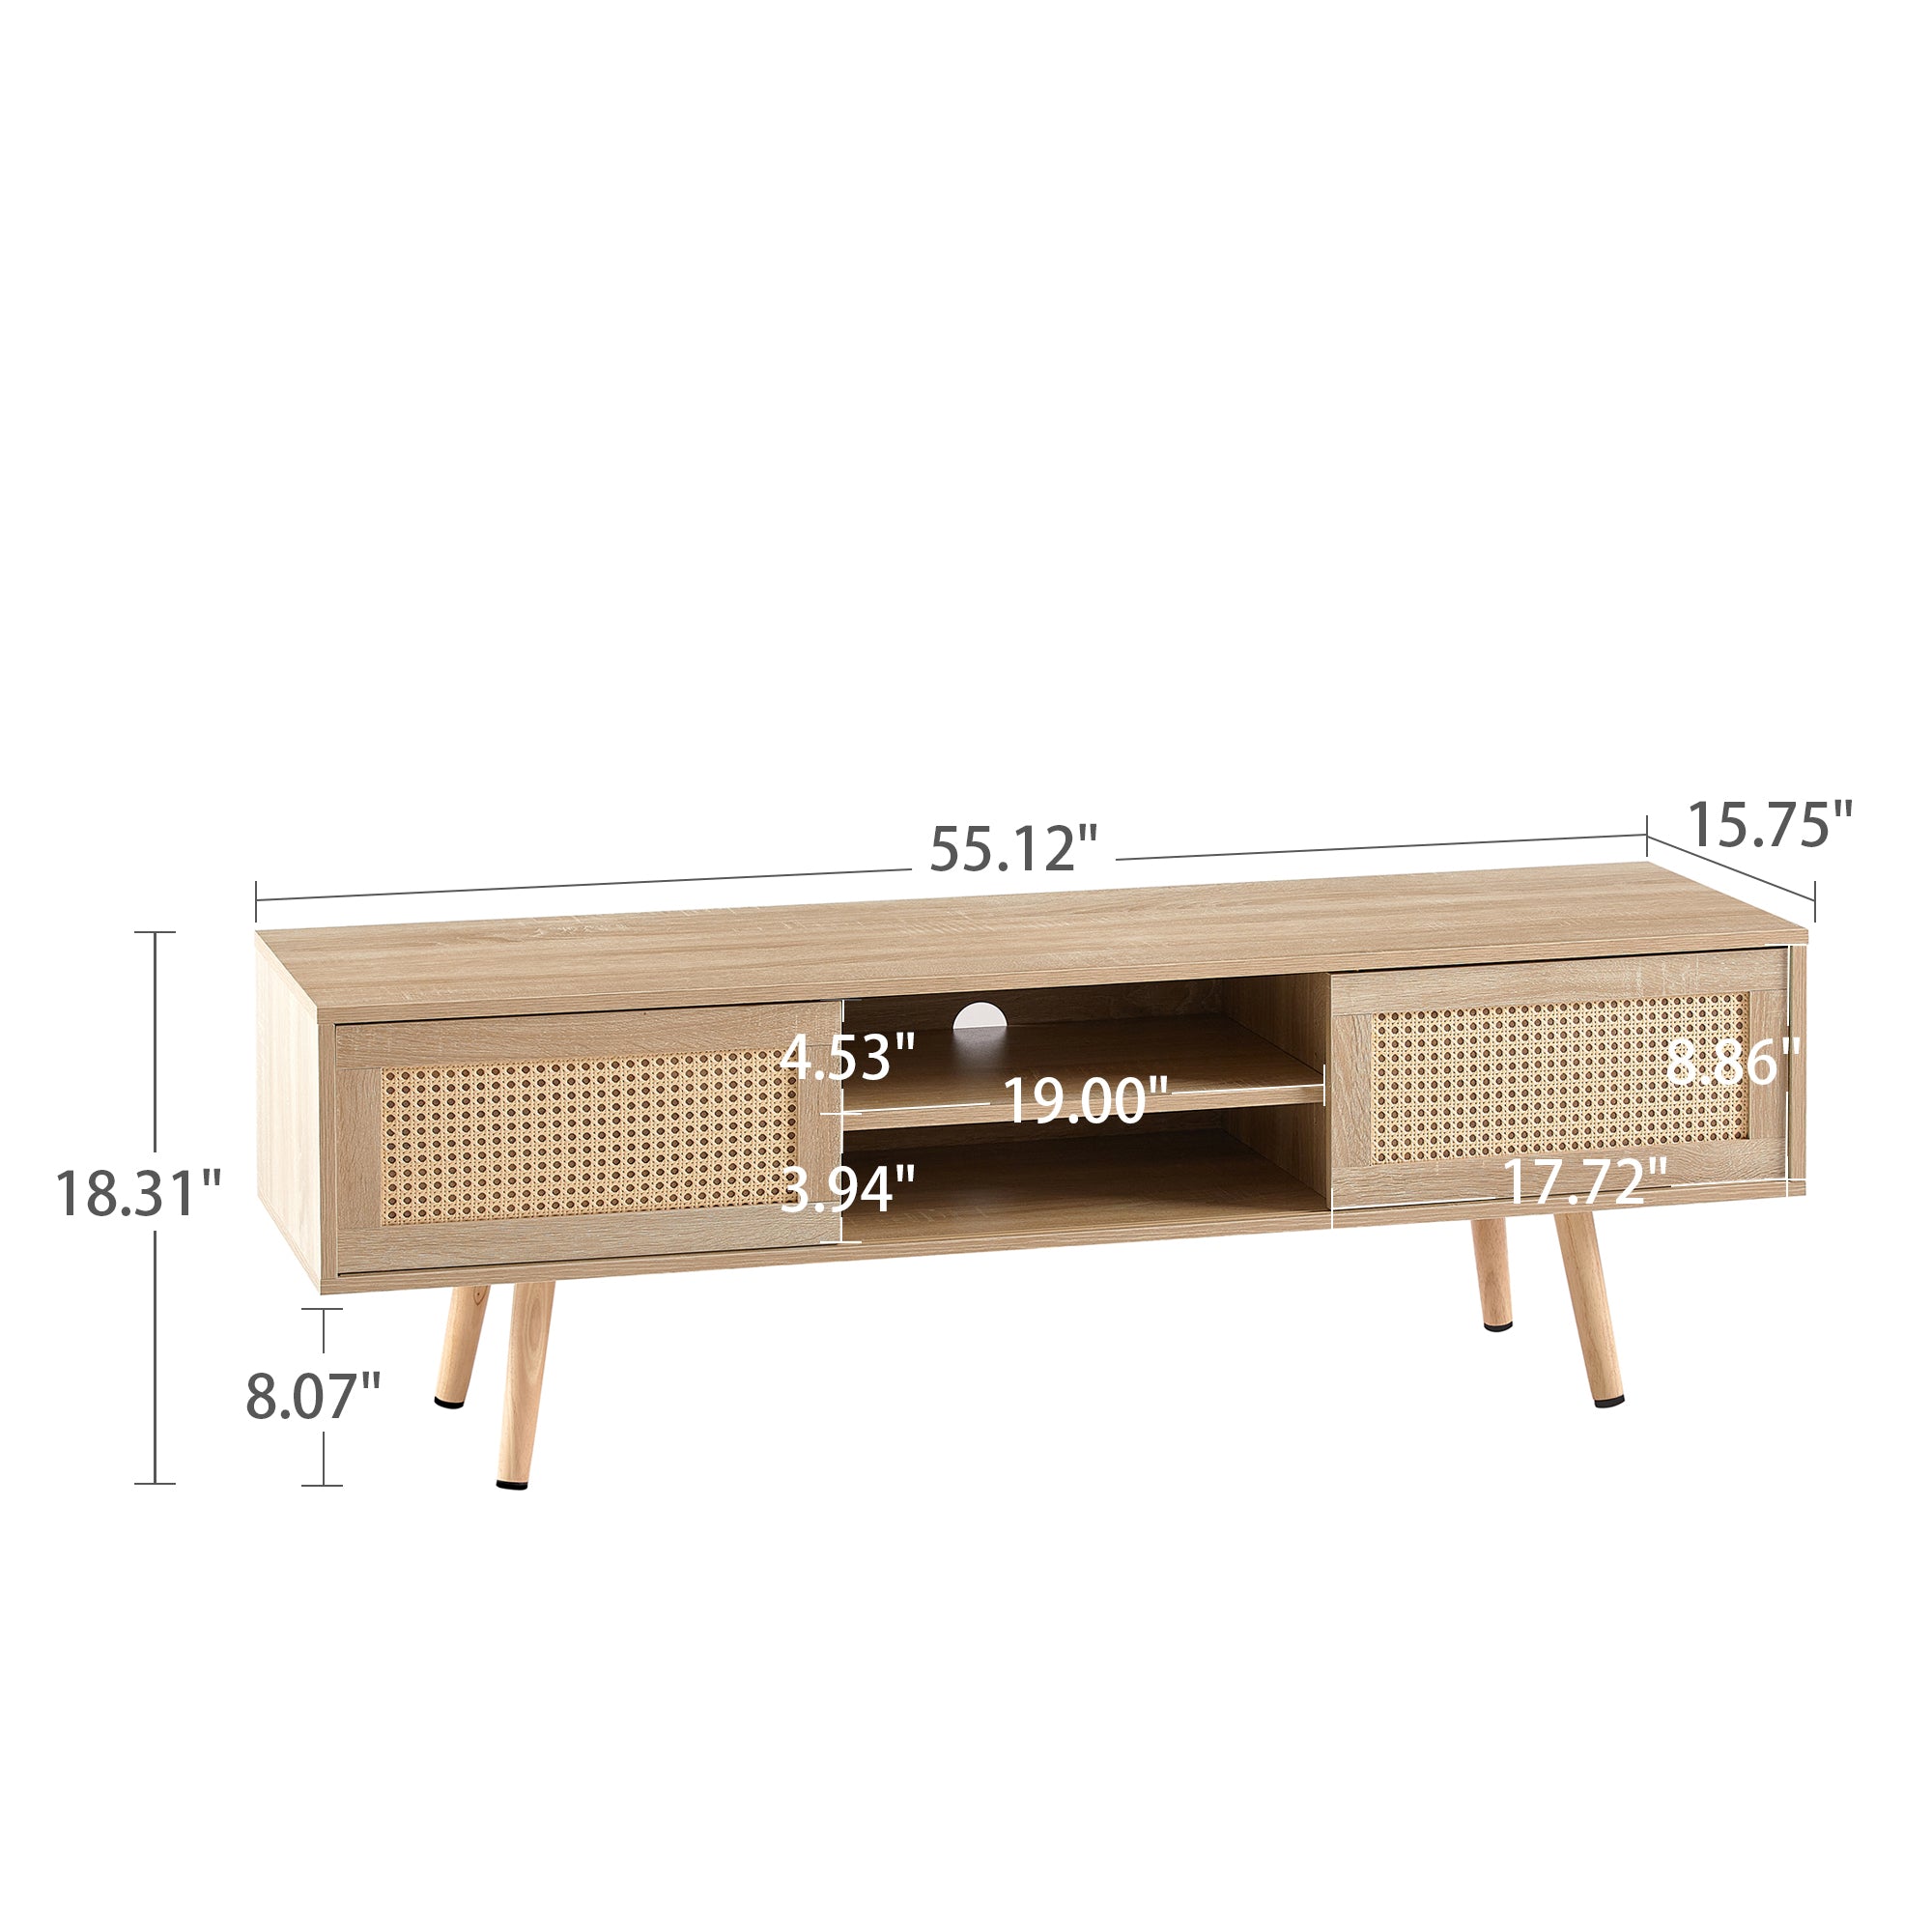 ZNTS 55.12" Rattan TV cabinet, double sliding doors for storage, adjustable shelf, solid wood legs, TV W126573117